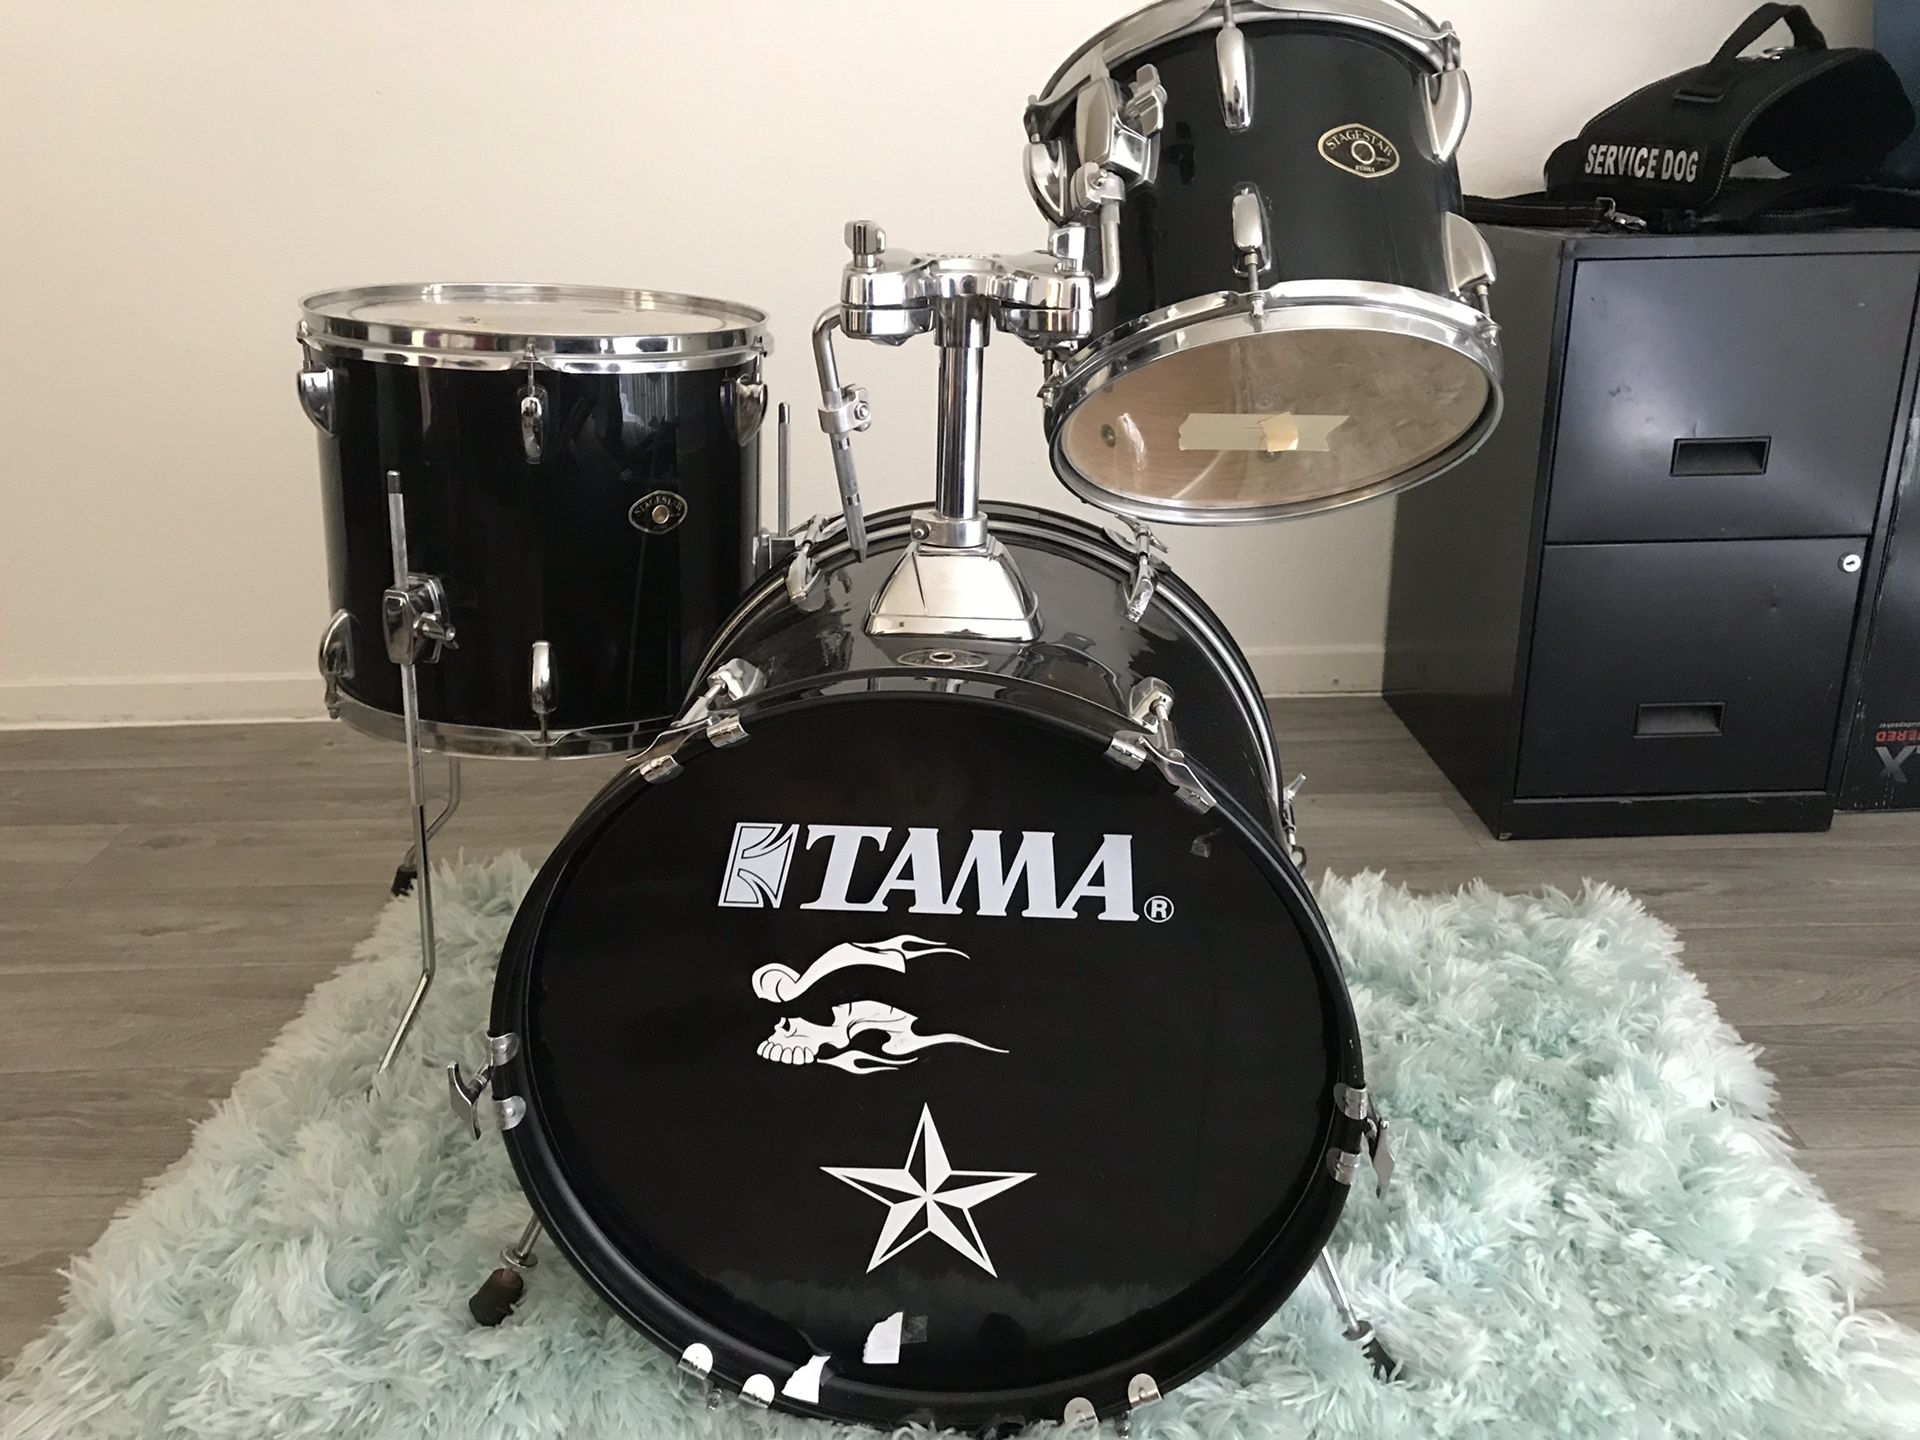 Tama bop kit drum set